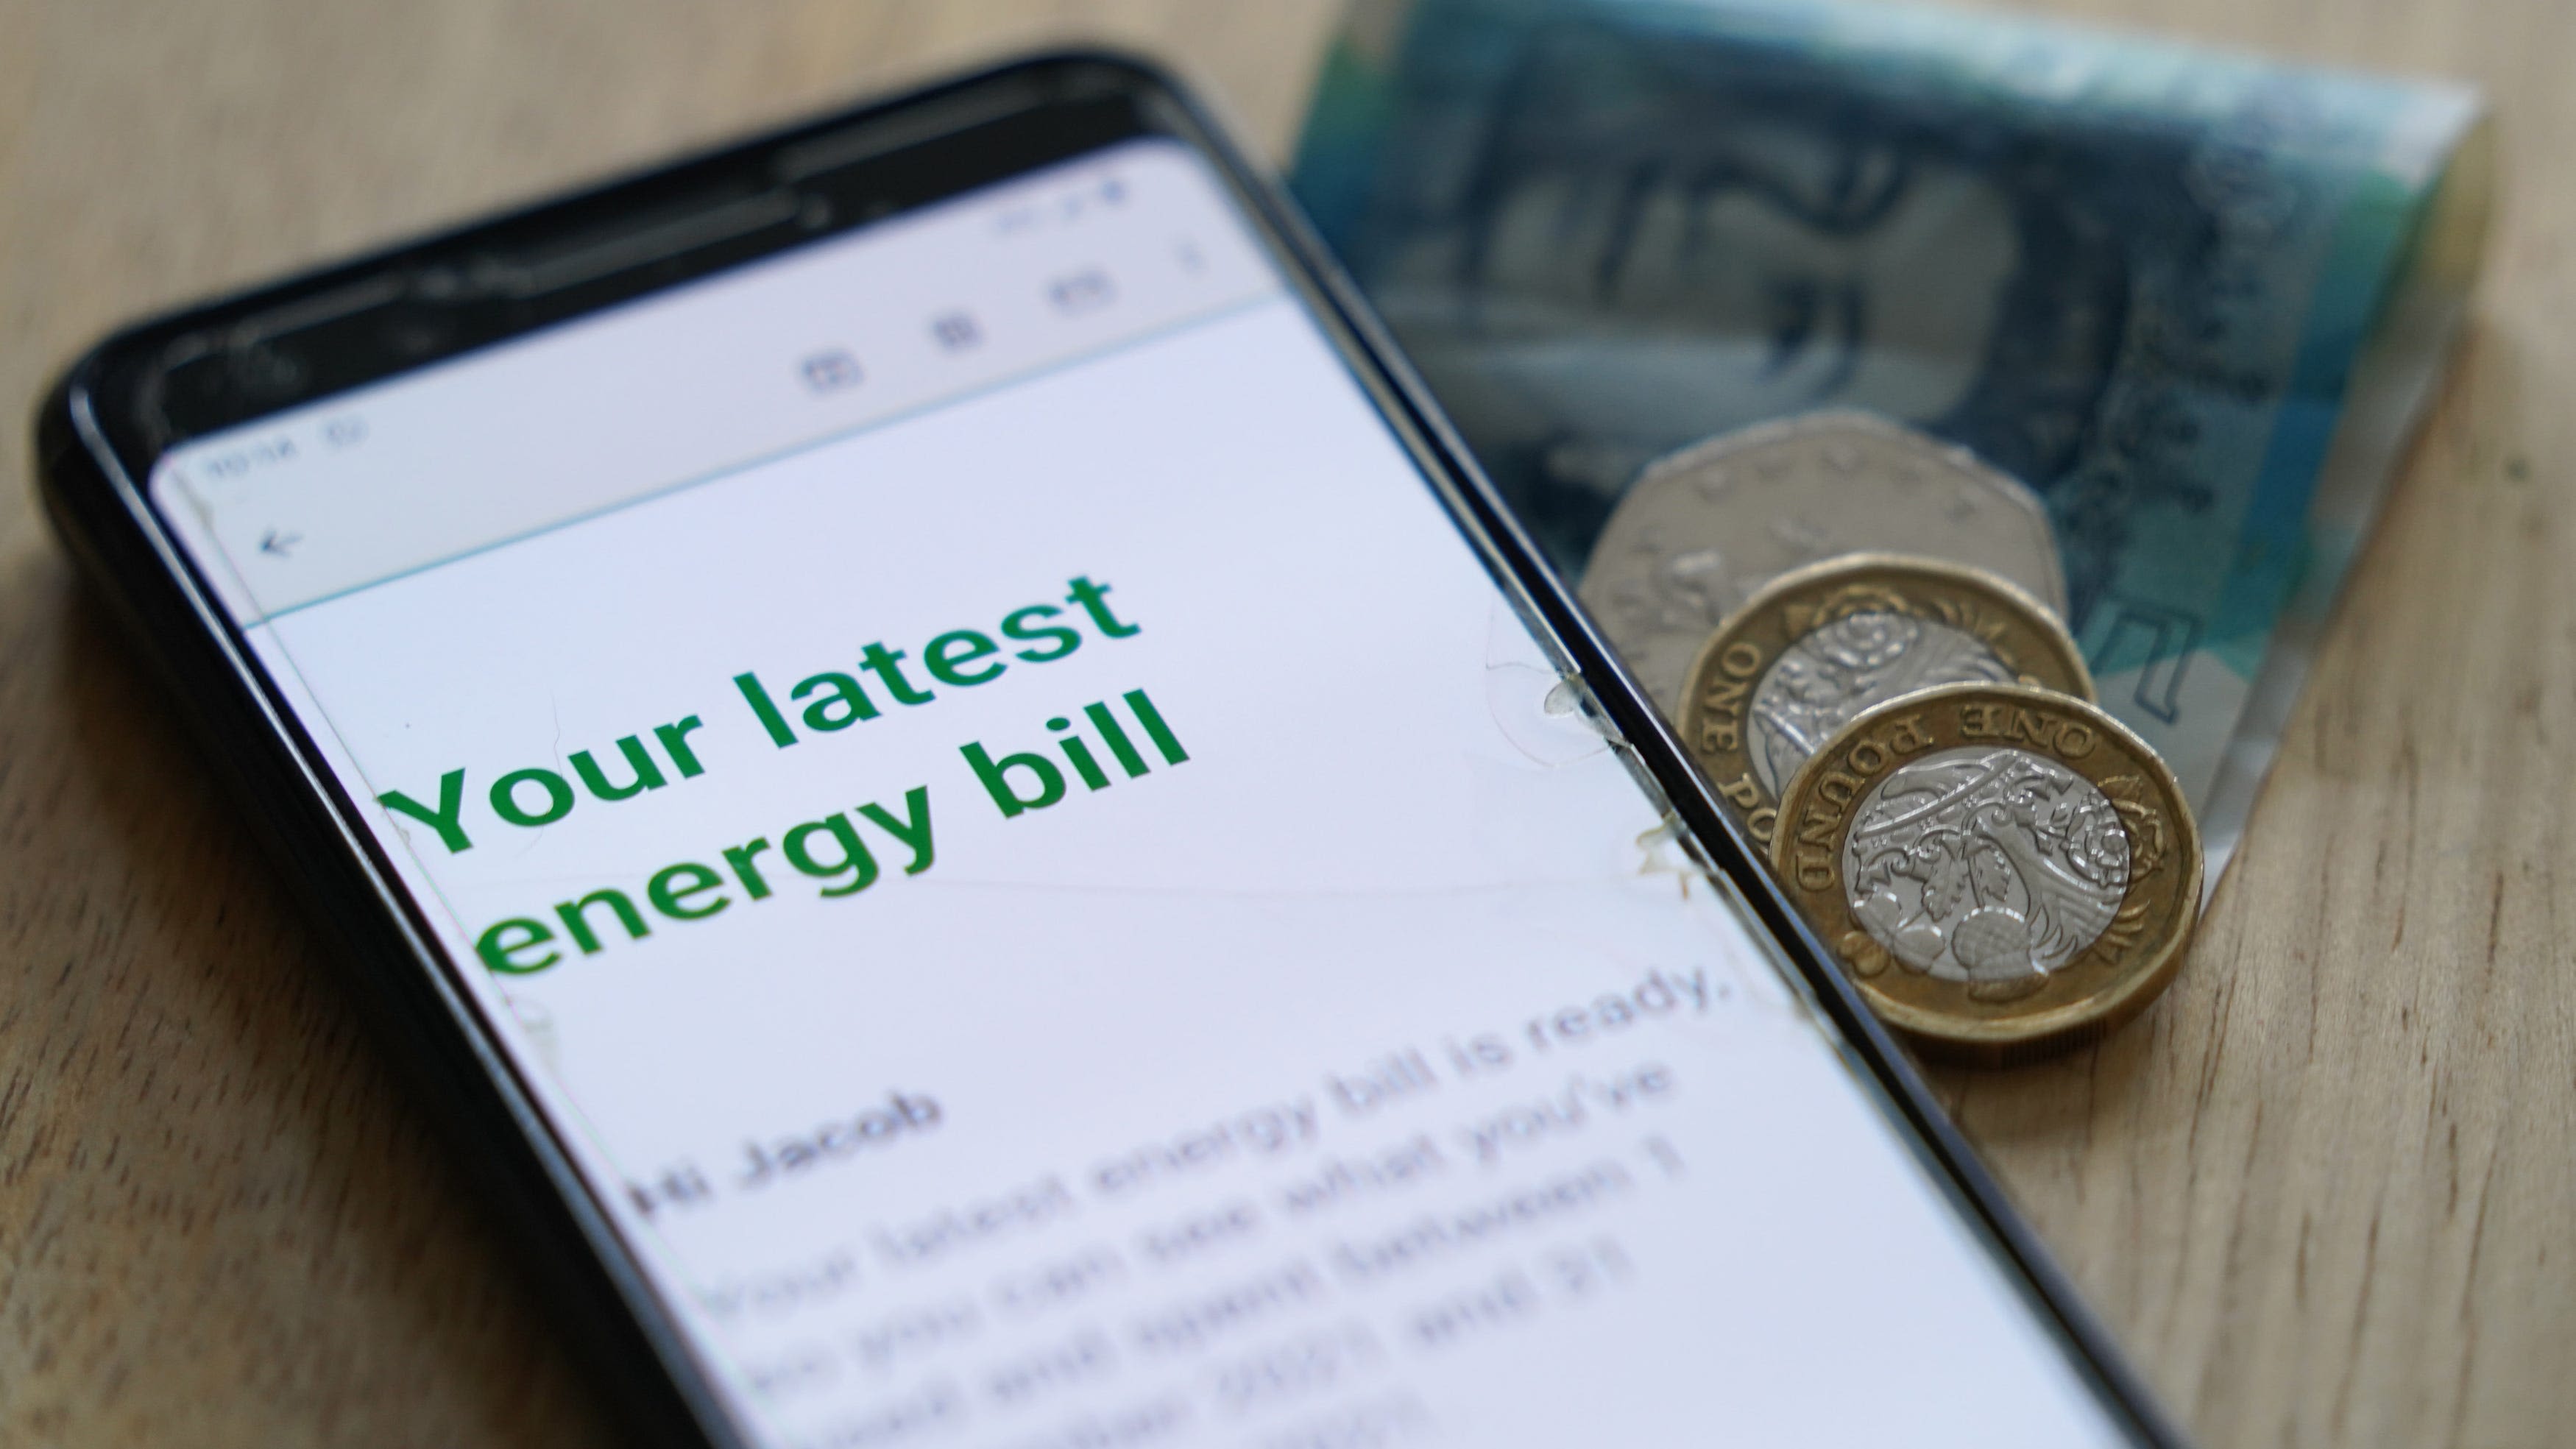 Slow progress on insulating homes adds £3.2bn to UK energy bills – think tank